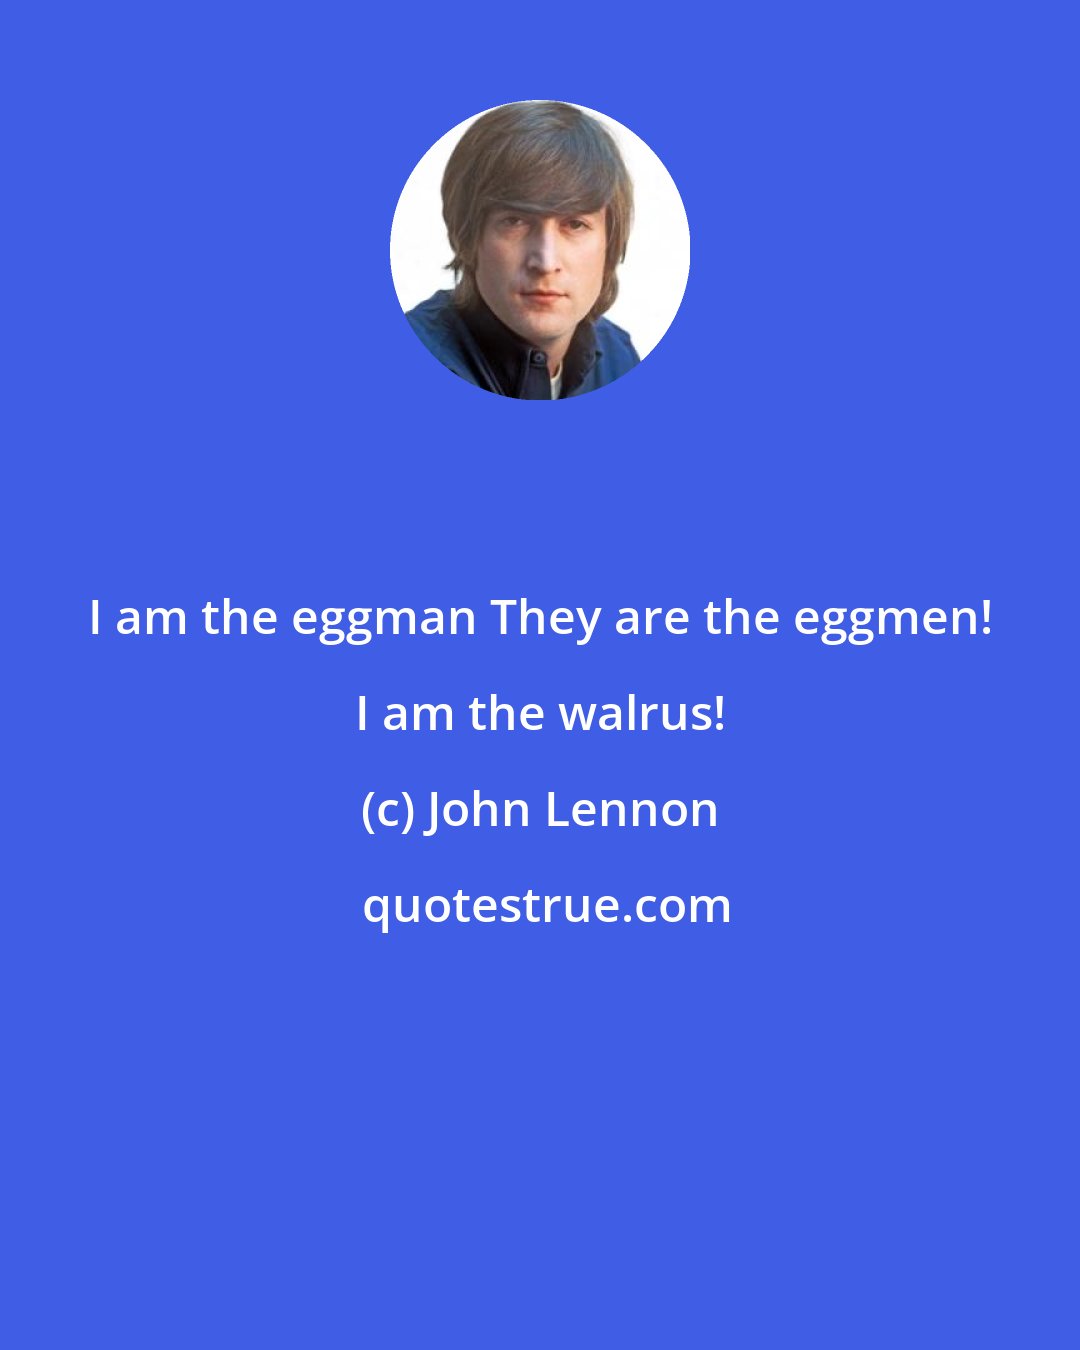 John Lennon: I am the eggman They are the eggmen! I am the walrus!